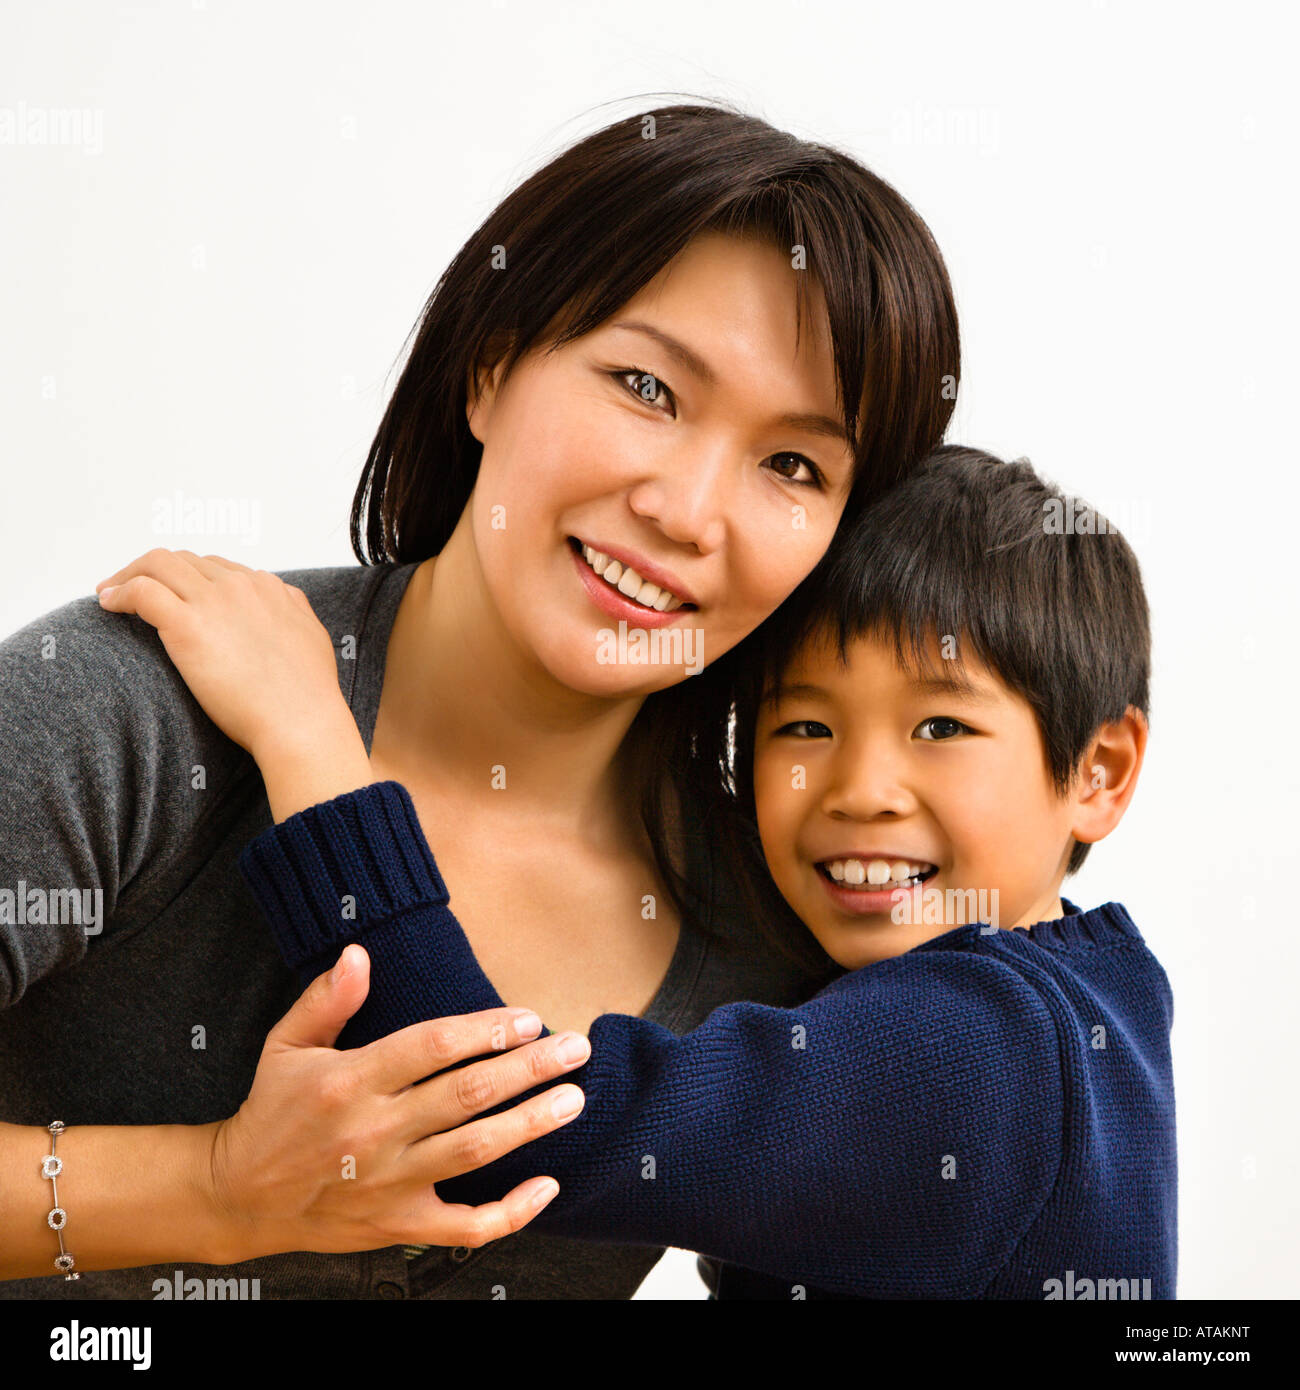 сын и мама азиатка (120) фото